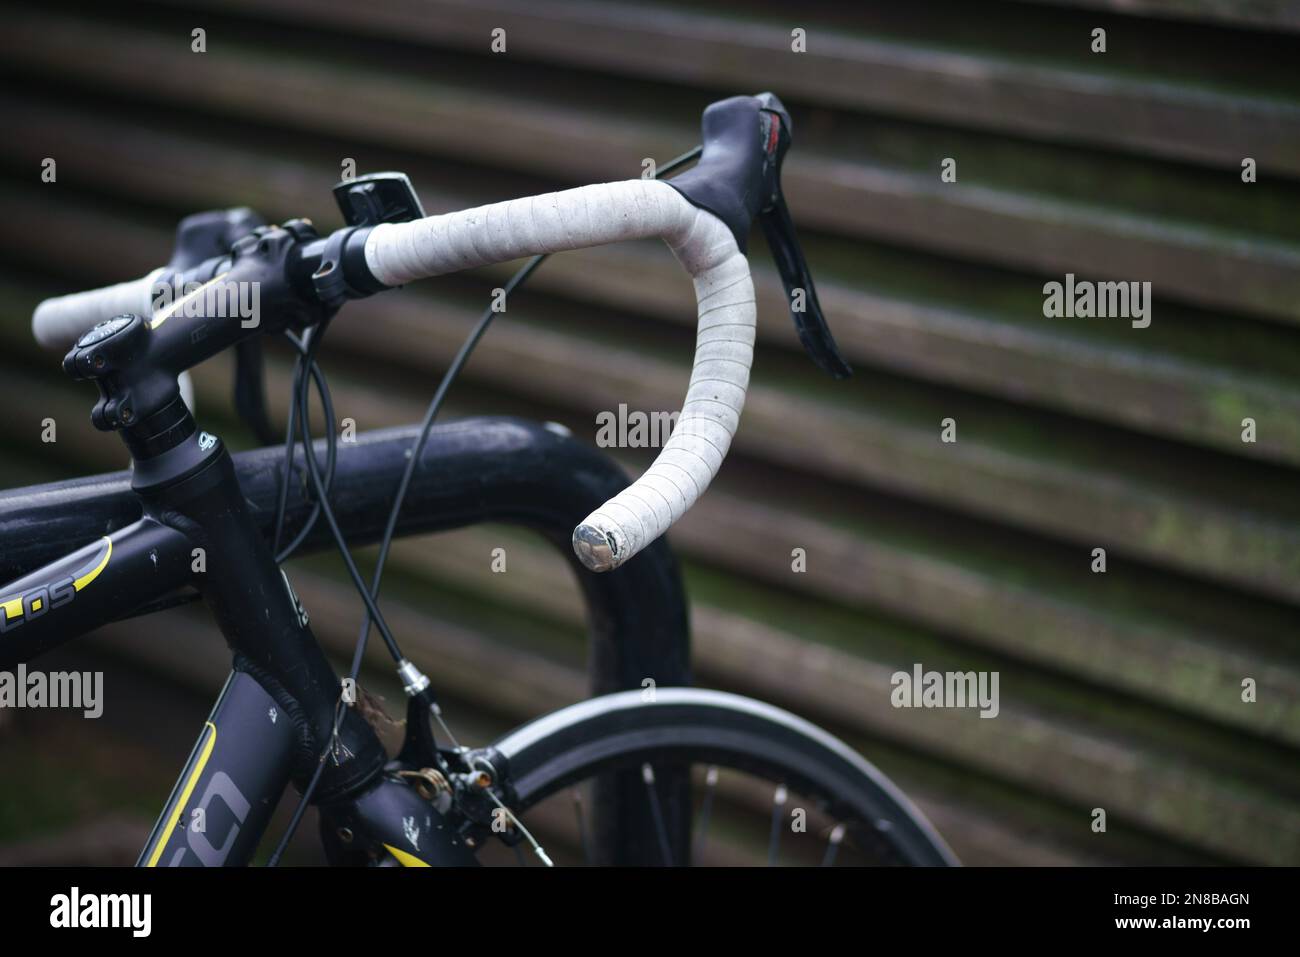 Taped handle bars on a racing bike to enhance grip. Stock Photo